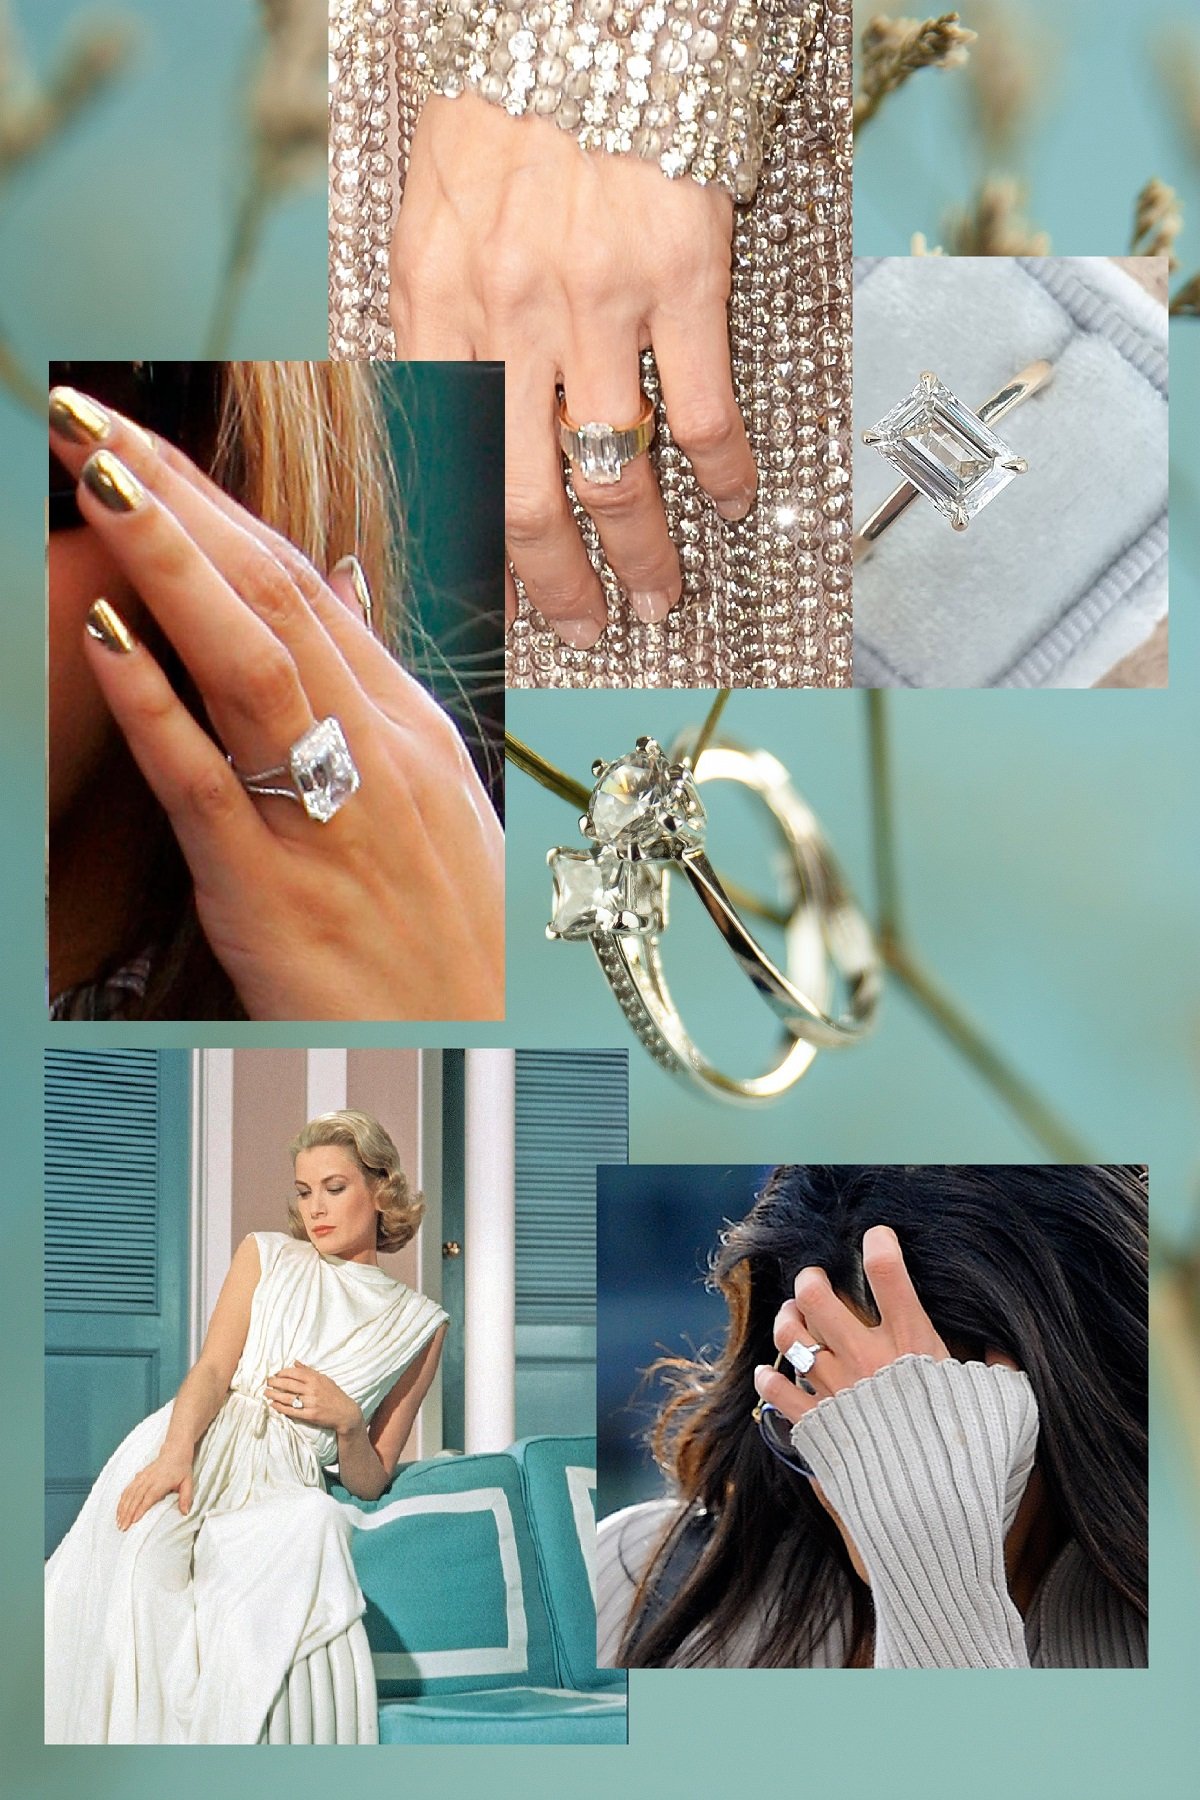 Women Ring Luster big diamond emerald rings lab grown diamond rings for  wedding, 19gm at Rs 11500 in Surat